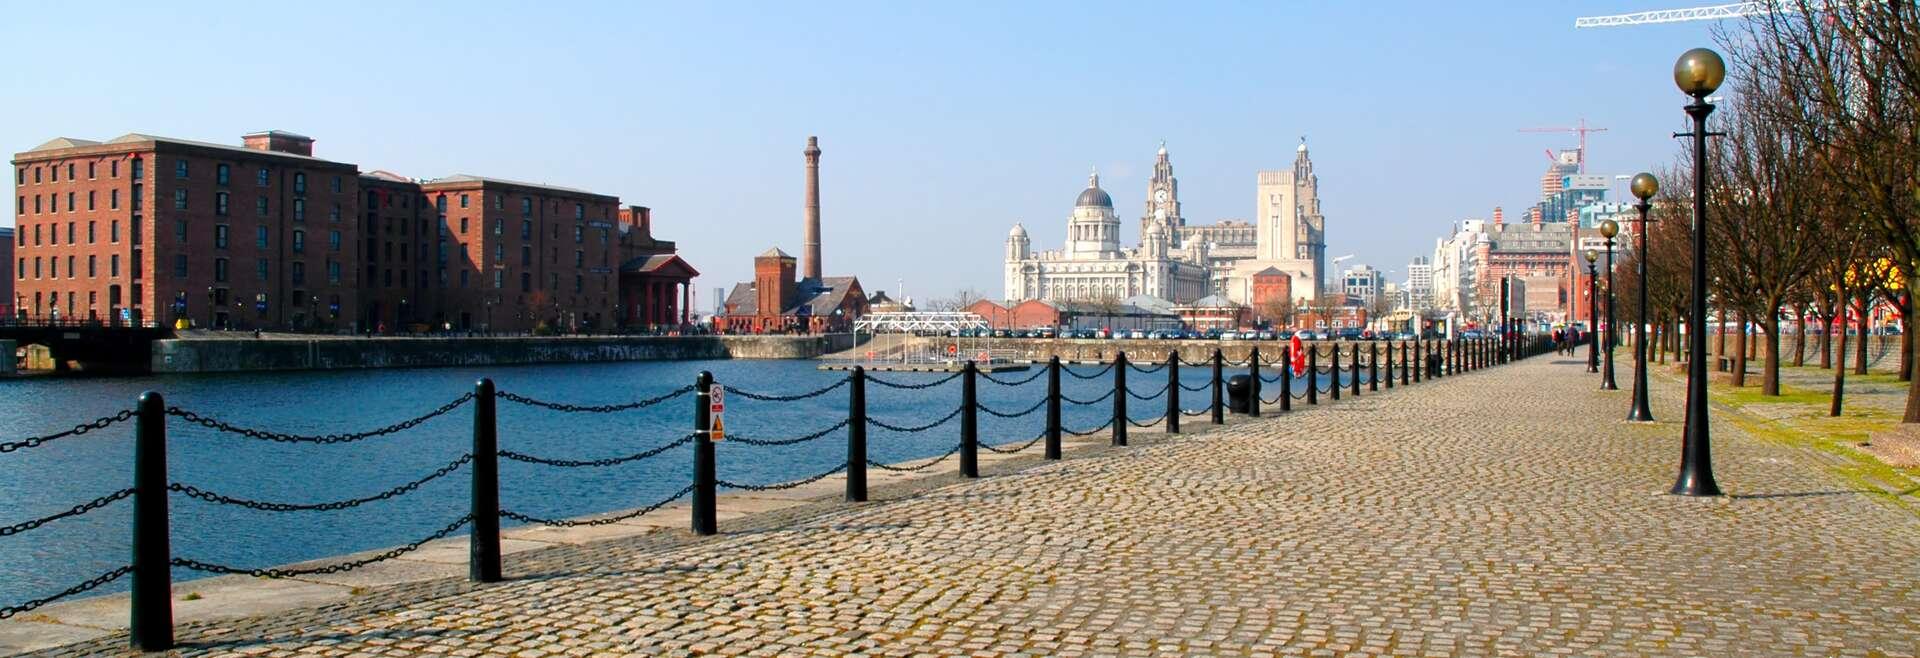 Séjour linguistique Angleterre, Liverpool - Promenade